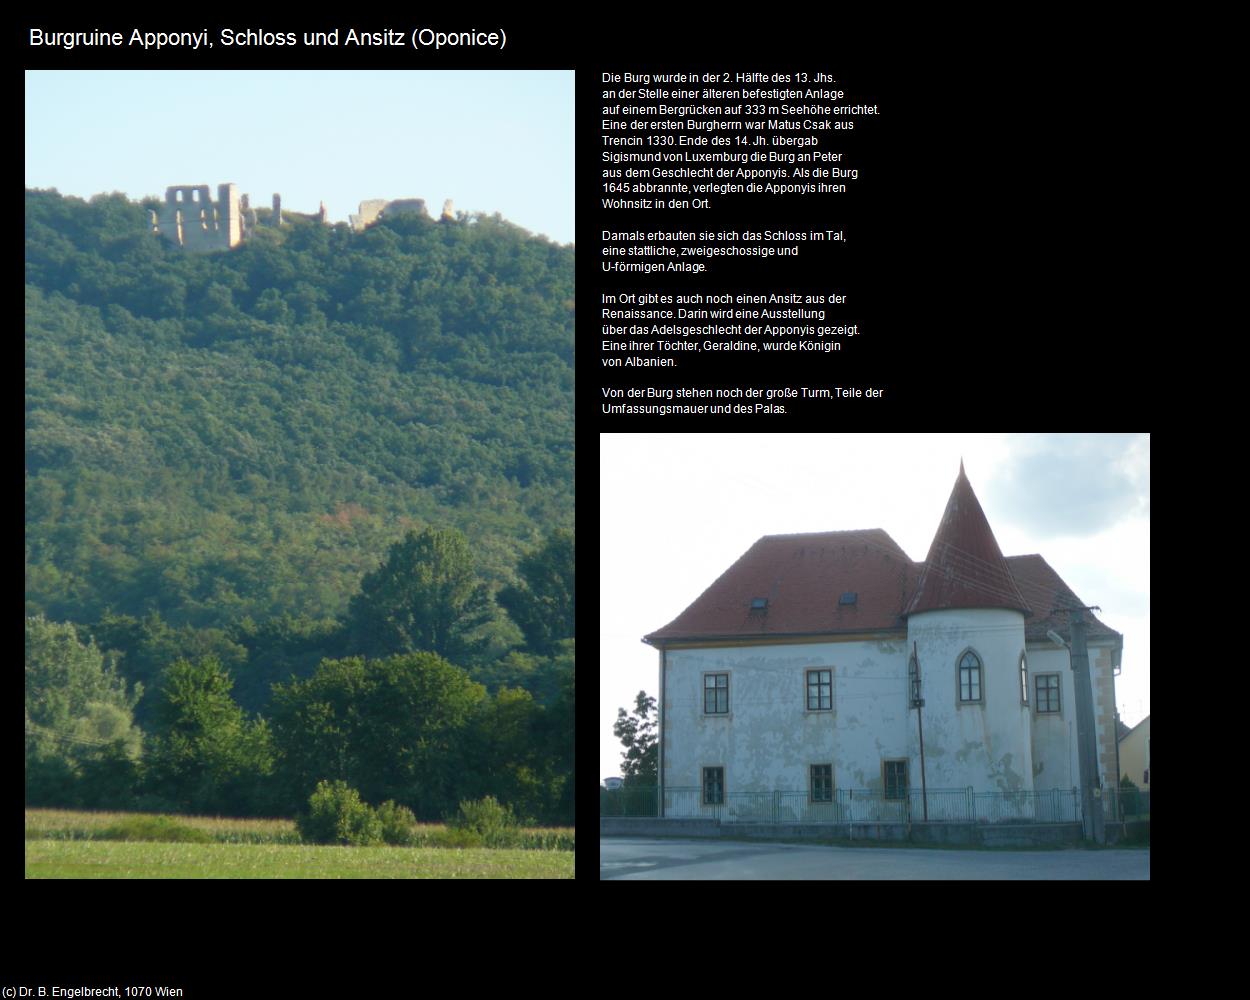 Burgruine Apponyi-Schloss und Ansitz (Oponice) in SLOWAKEI